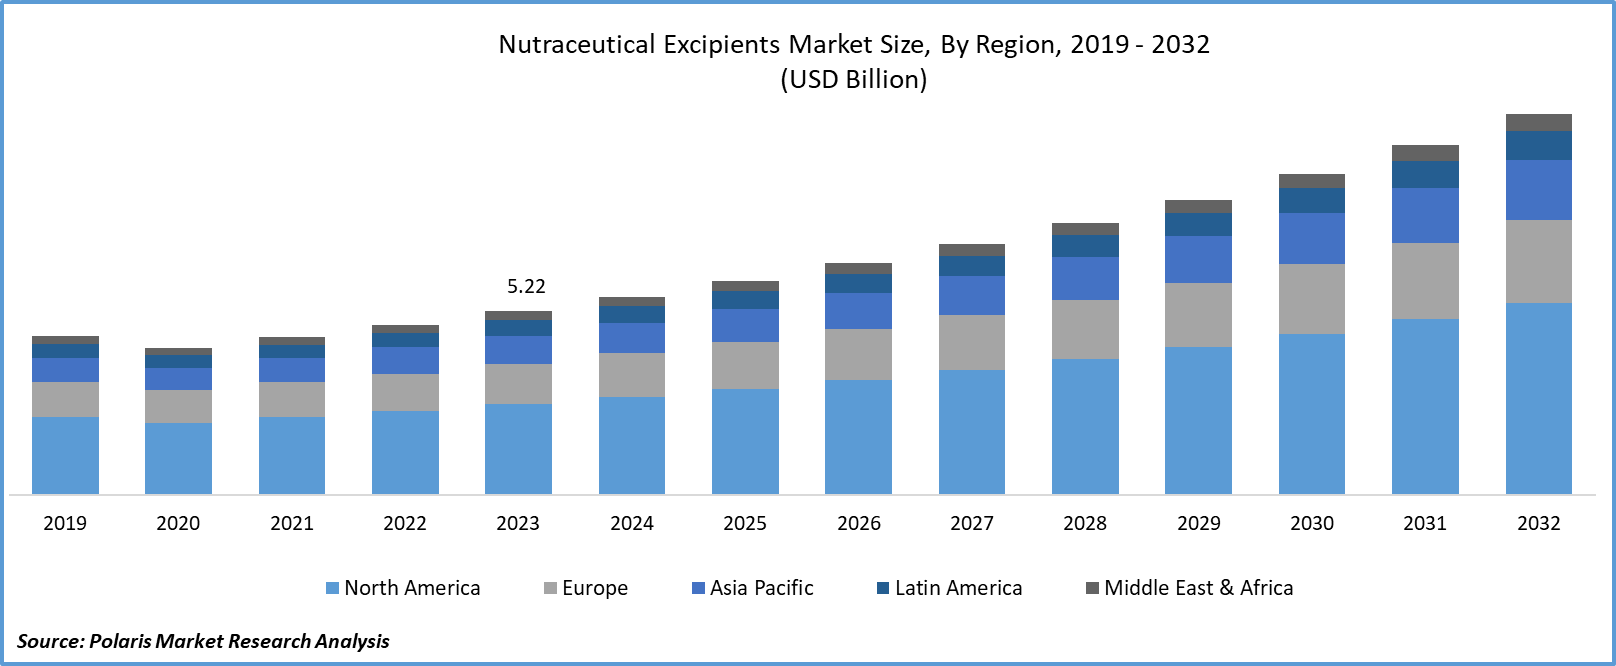 Nutraceutical Excipients Market Size